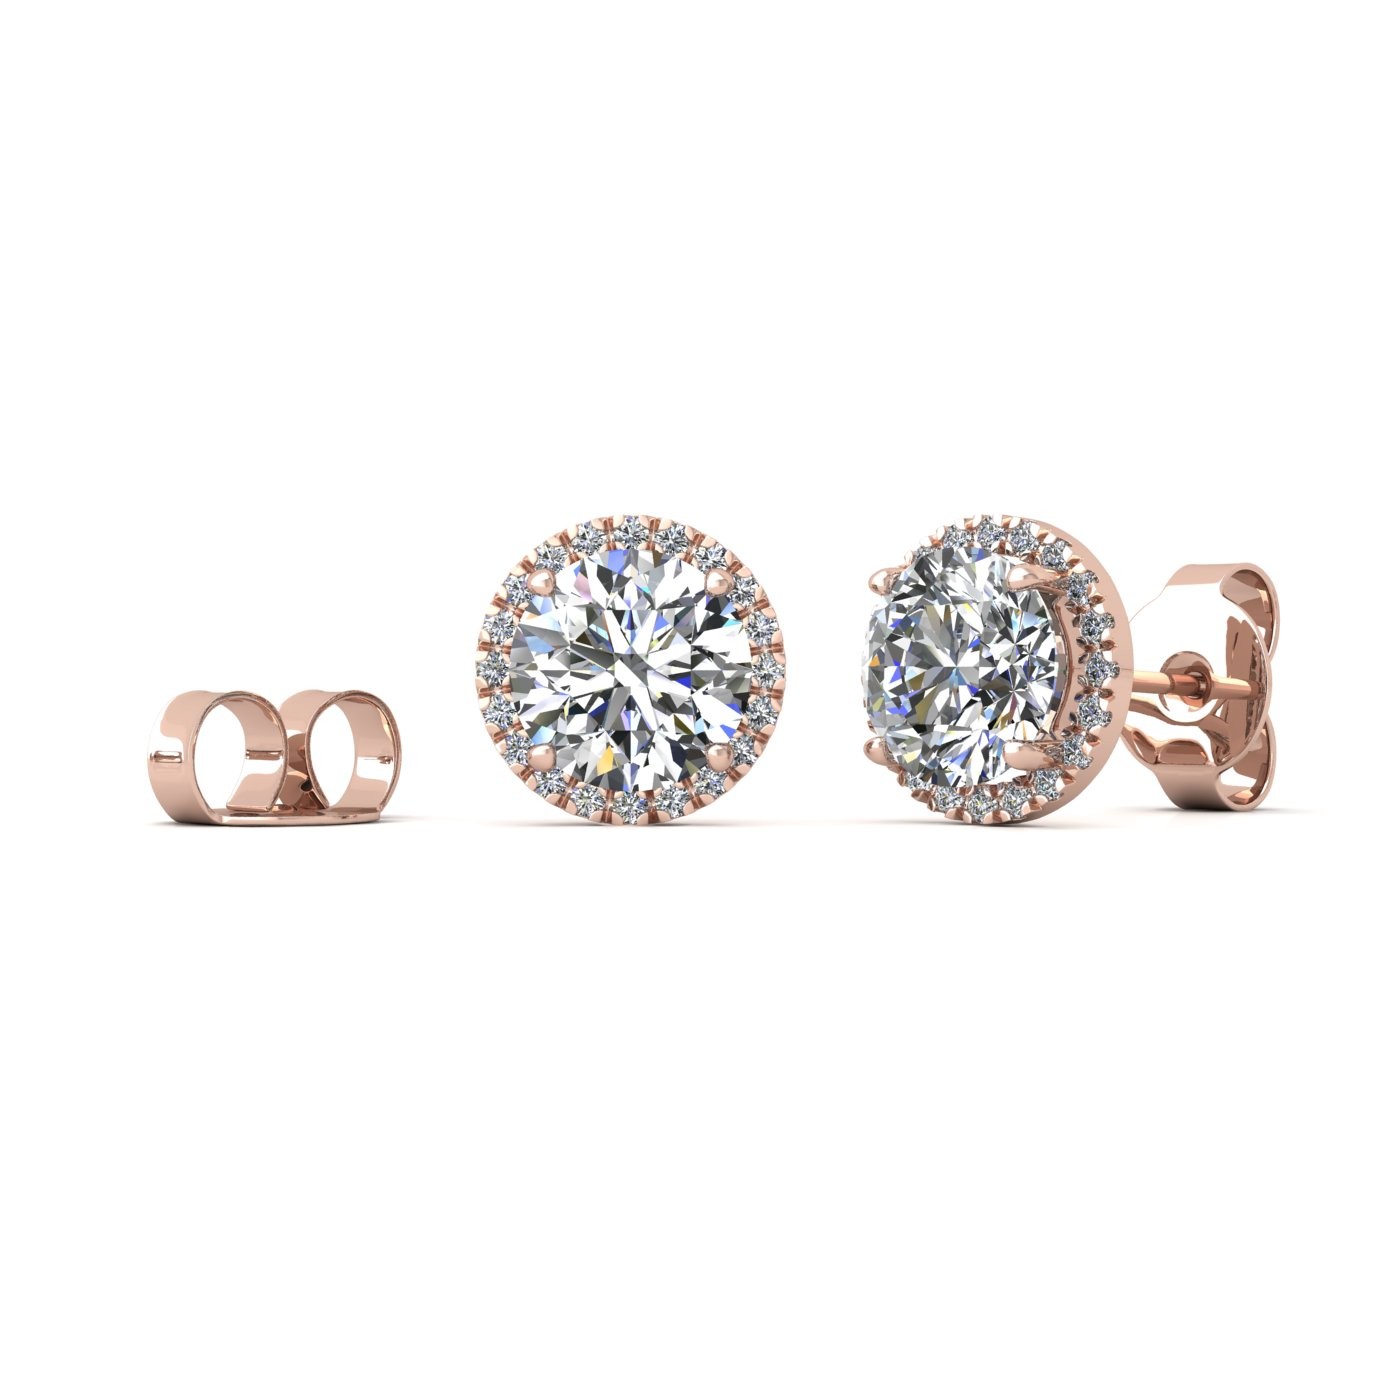 18k rose gold 1,2 ct each (2,4 tcw) 4 prongs round shape diamond earrings with diamond pavÉ set halo Photos & images